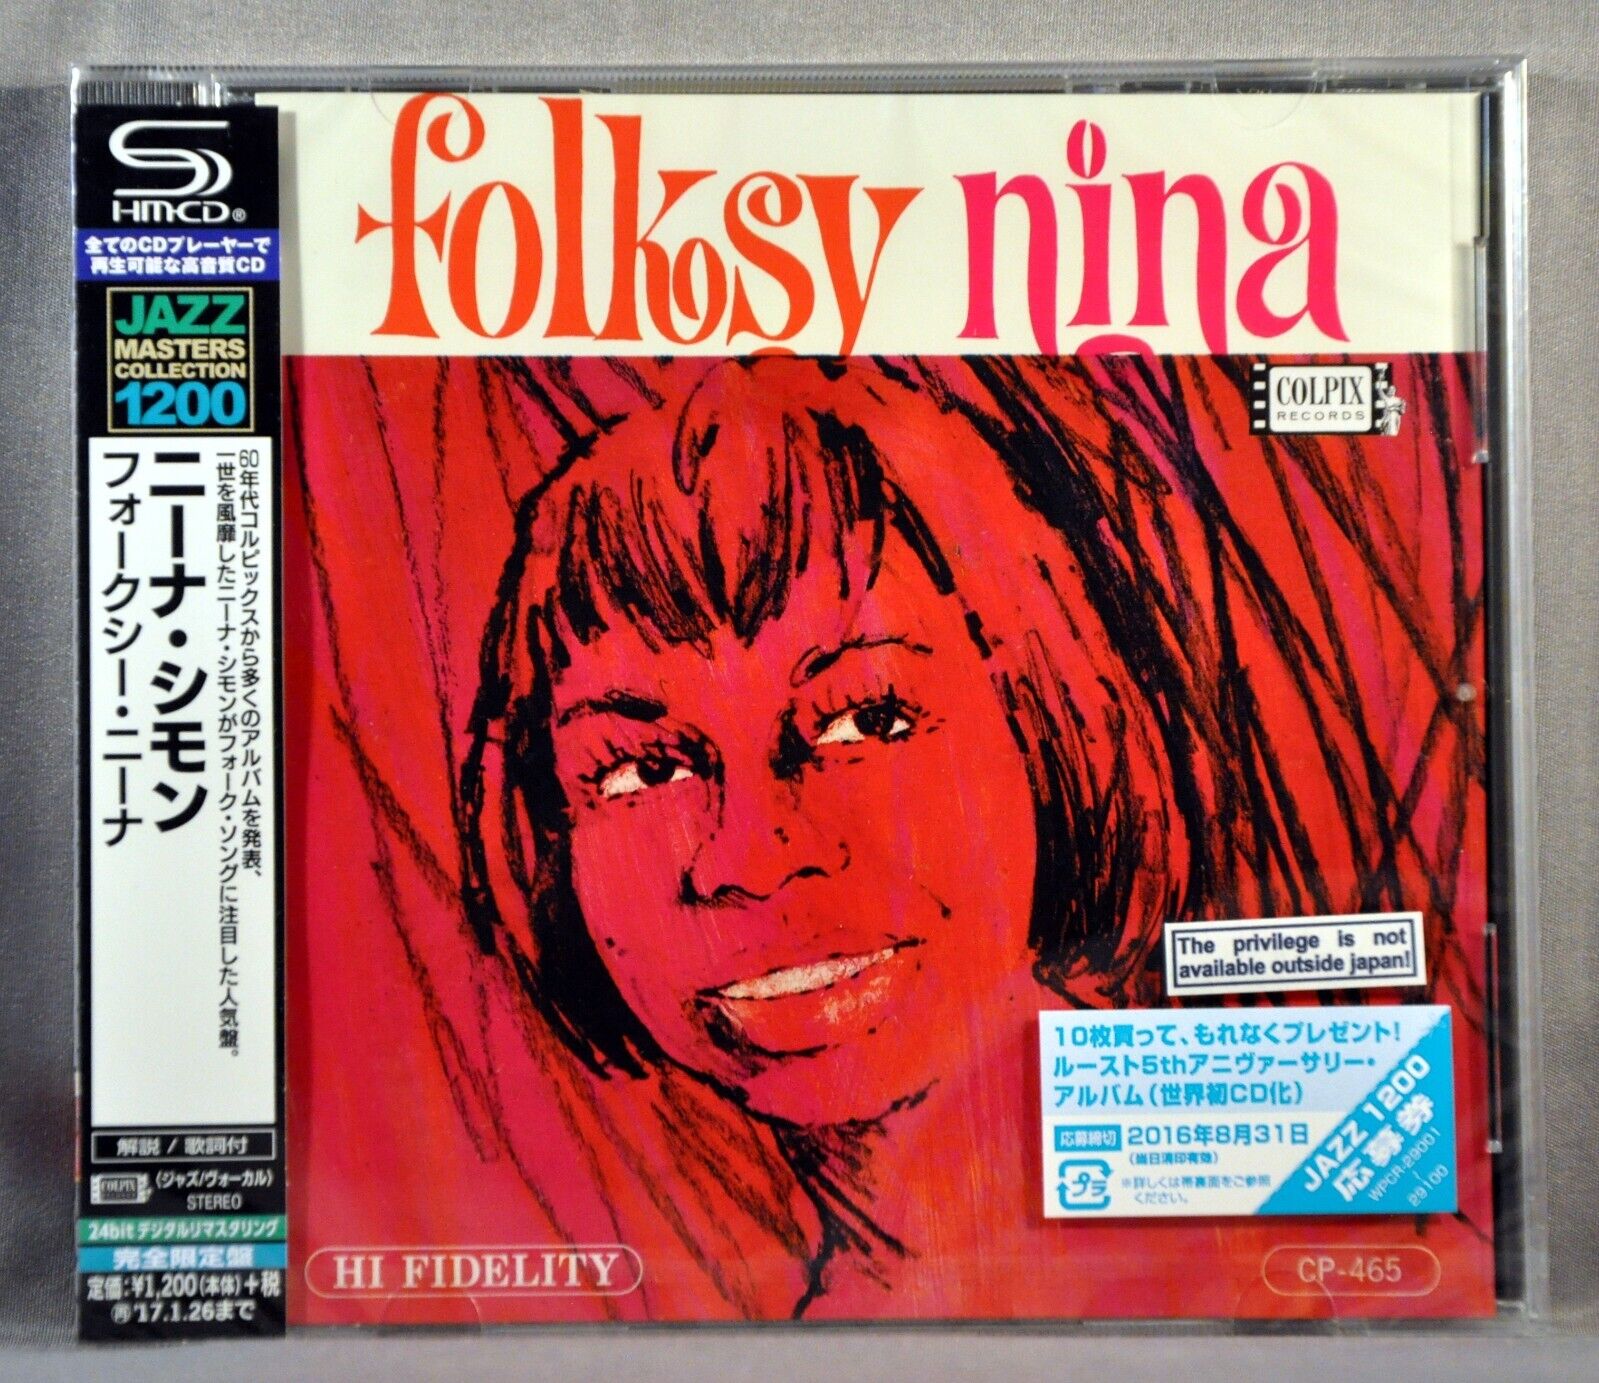 Folksy Nina by Nina Simone (CD, Aug-2016) for sale online | eBay